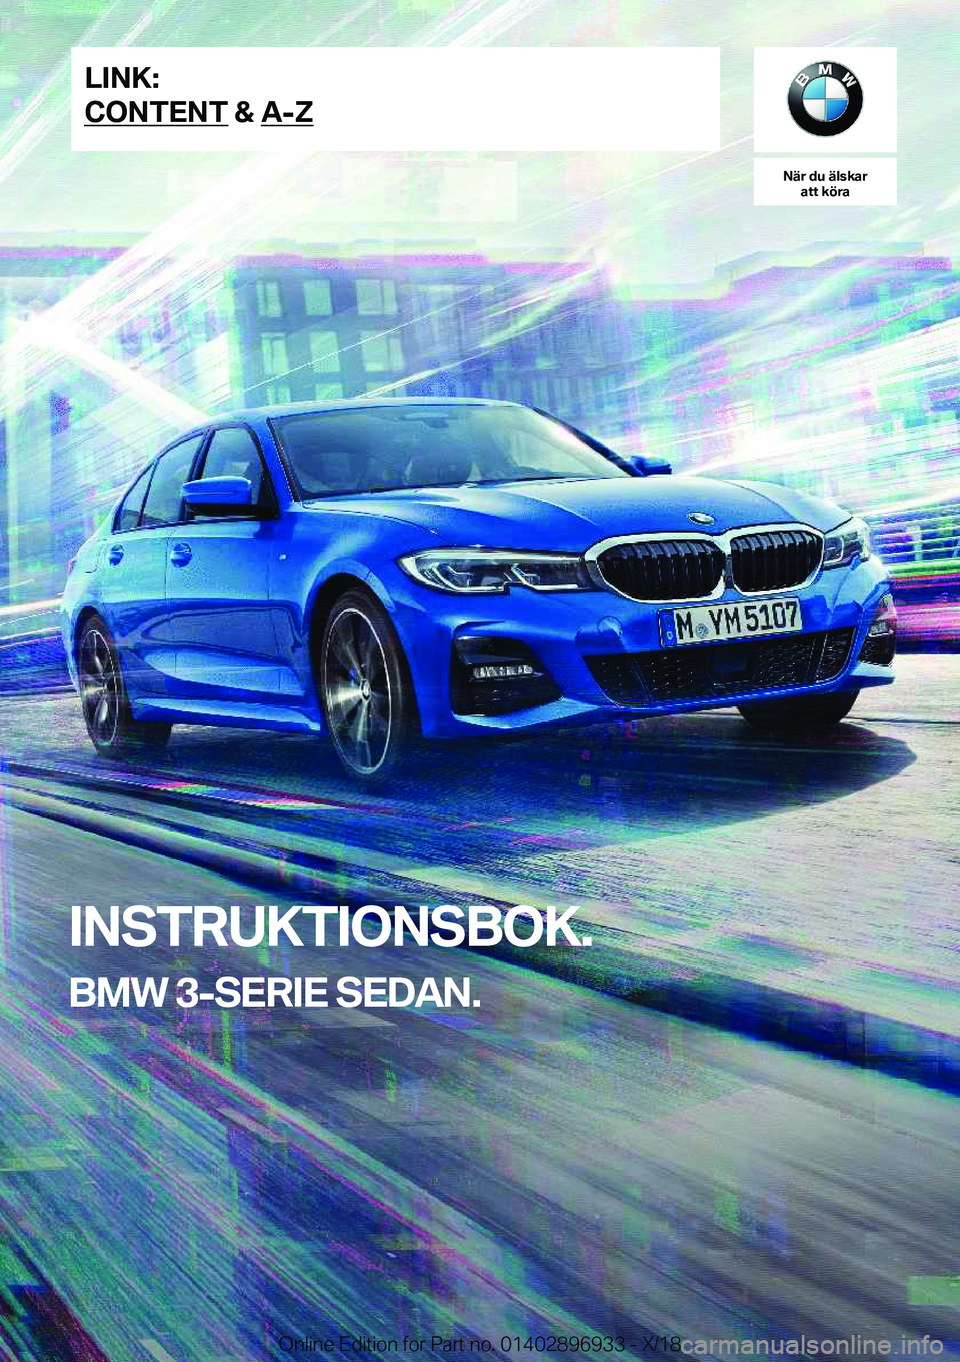 BMW 3 SERIES 2019  InstruktionsbÖcker (in Swedish) �N�ä�r��d�u��ä�l�s�k�a�r�a�t�t��k�